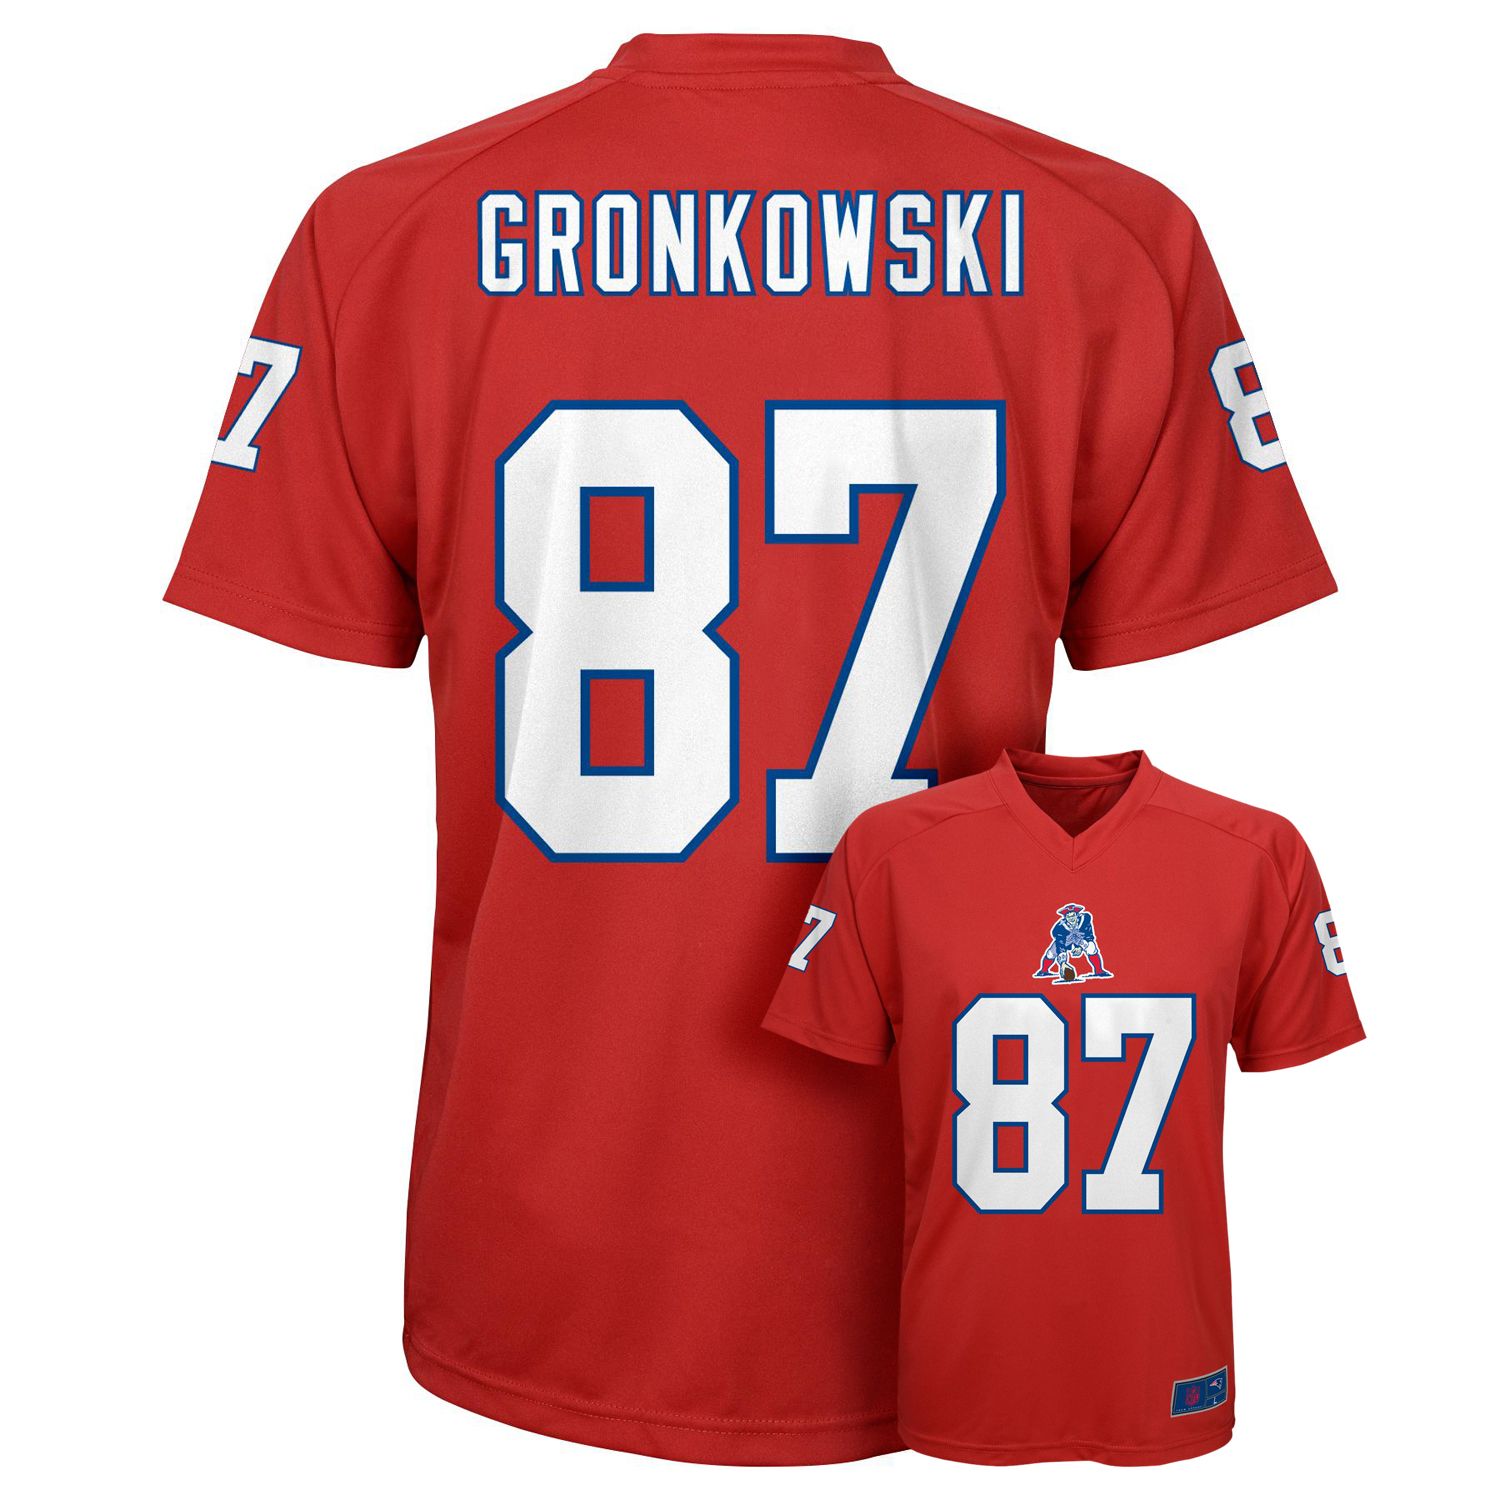 gronkowski replica jersey